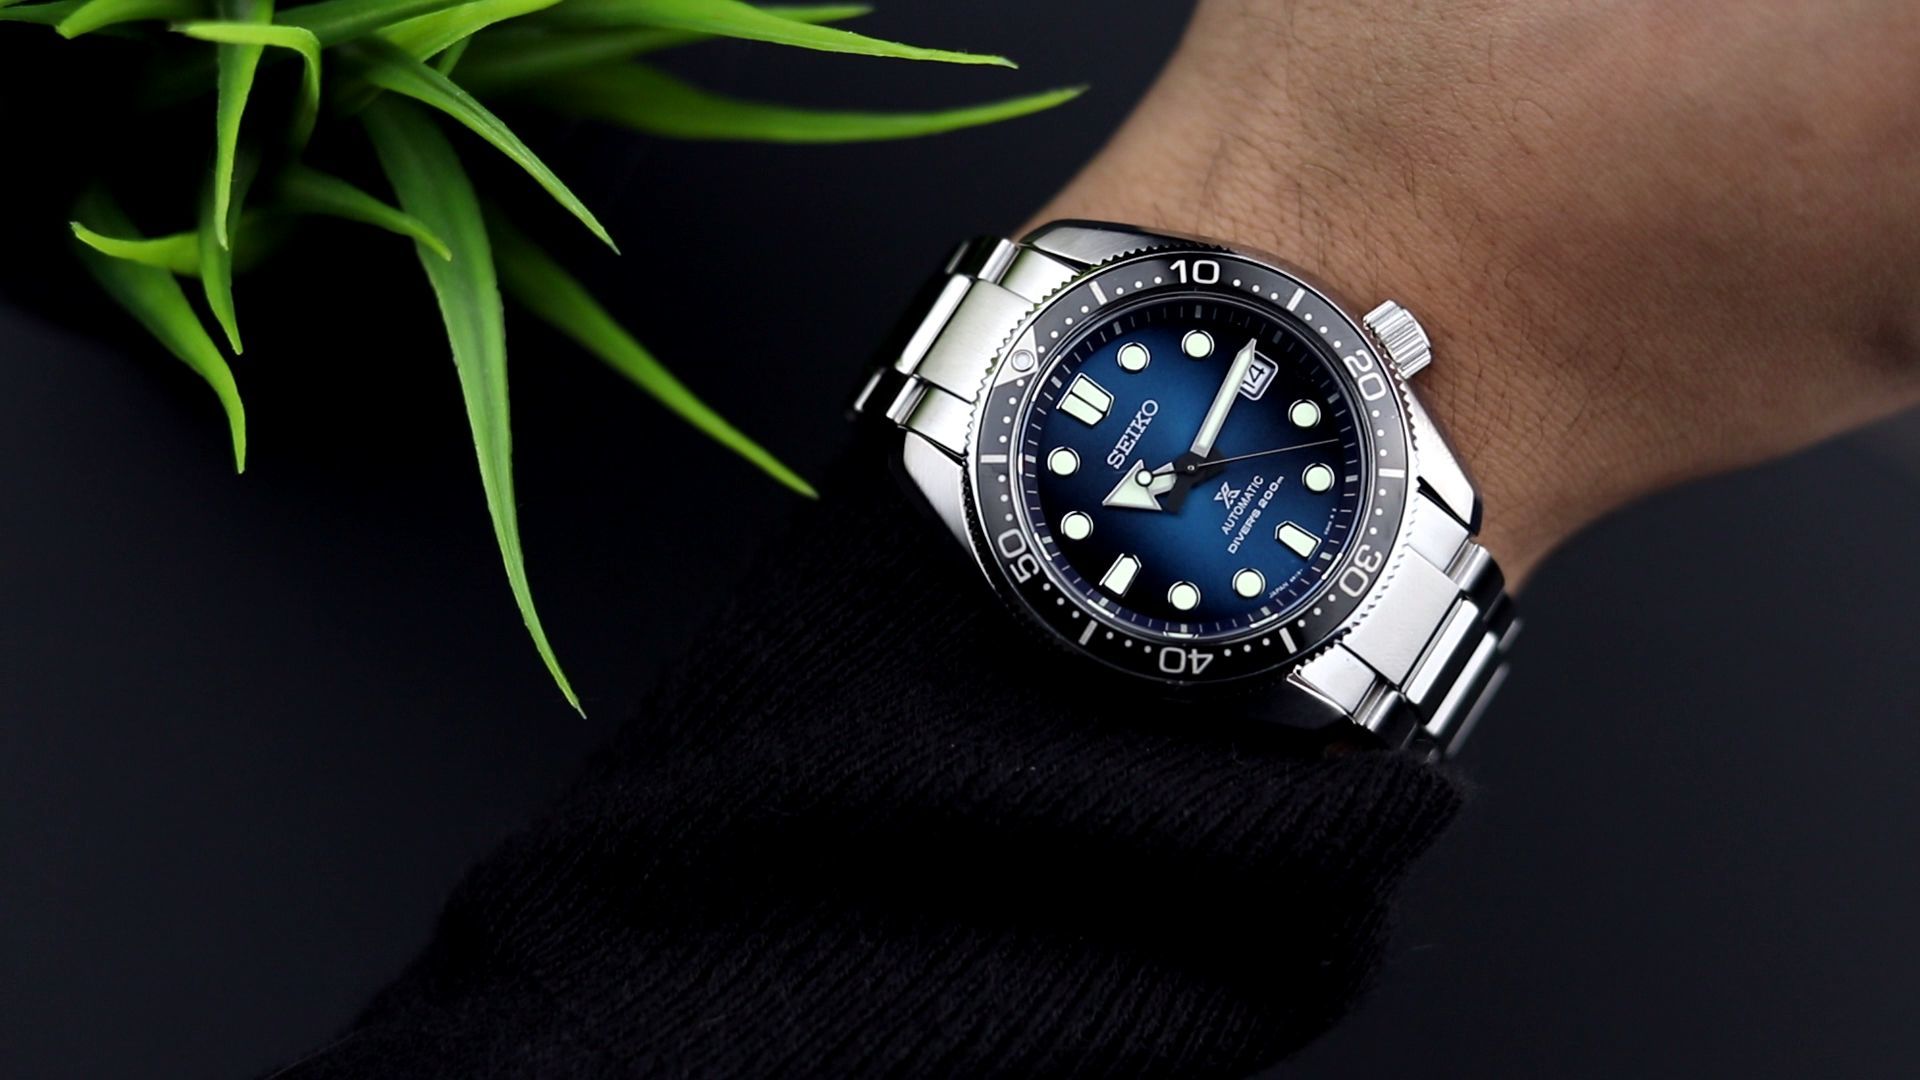 Seiko Prospex SBDC065 Watch Review 2019 - Timepieces Blog